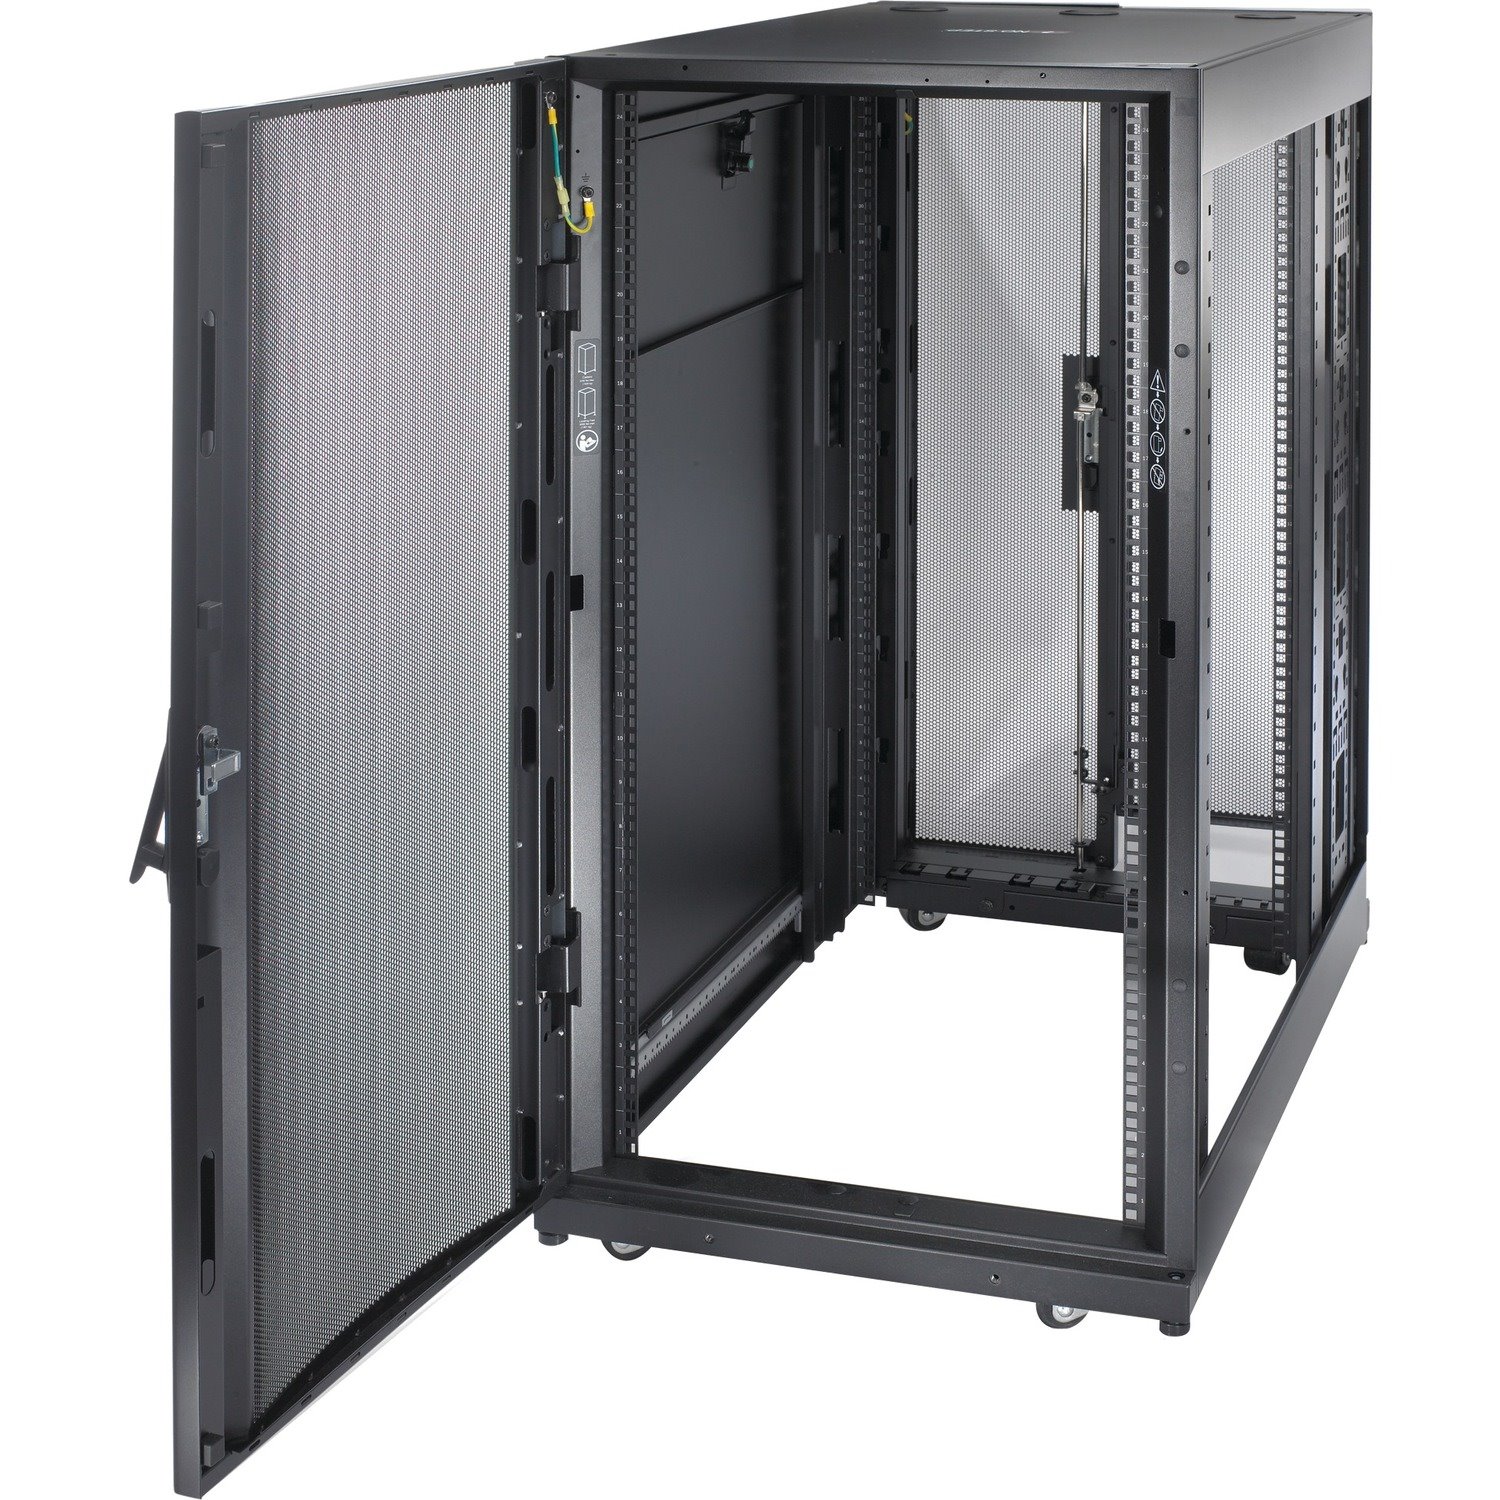 APC by Schneider Electric NetShelter SX, Server Rack Enclosure, 24U, Black, 1198.5H x 600W x 1070D mm